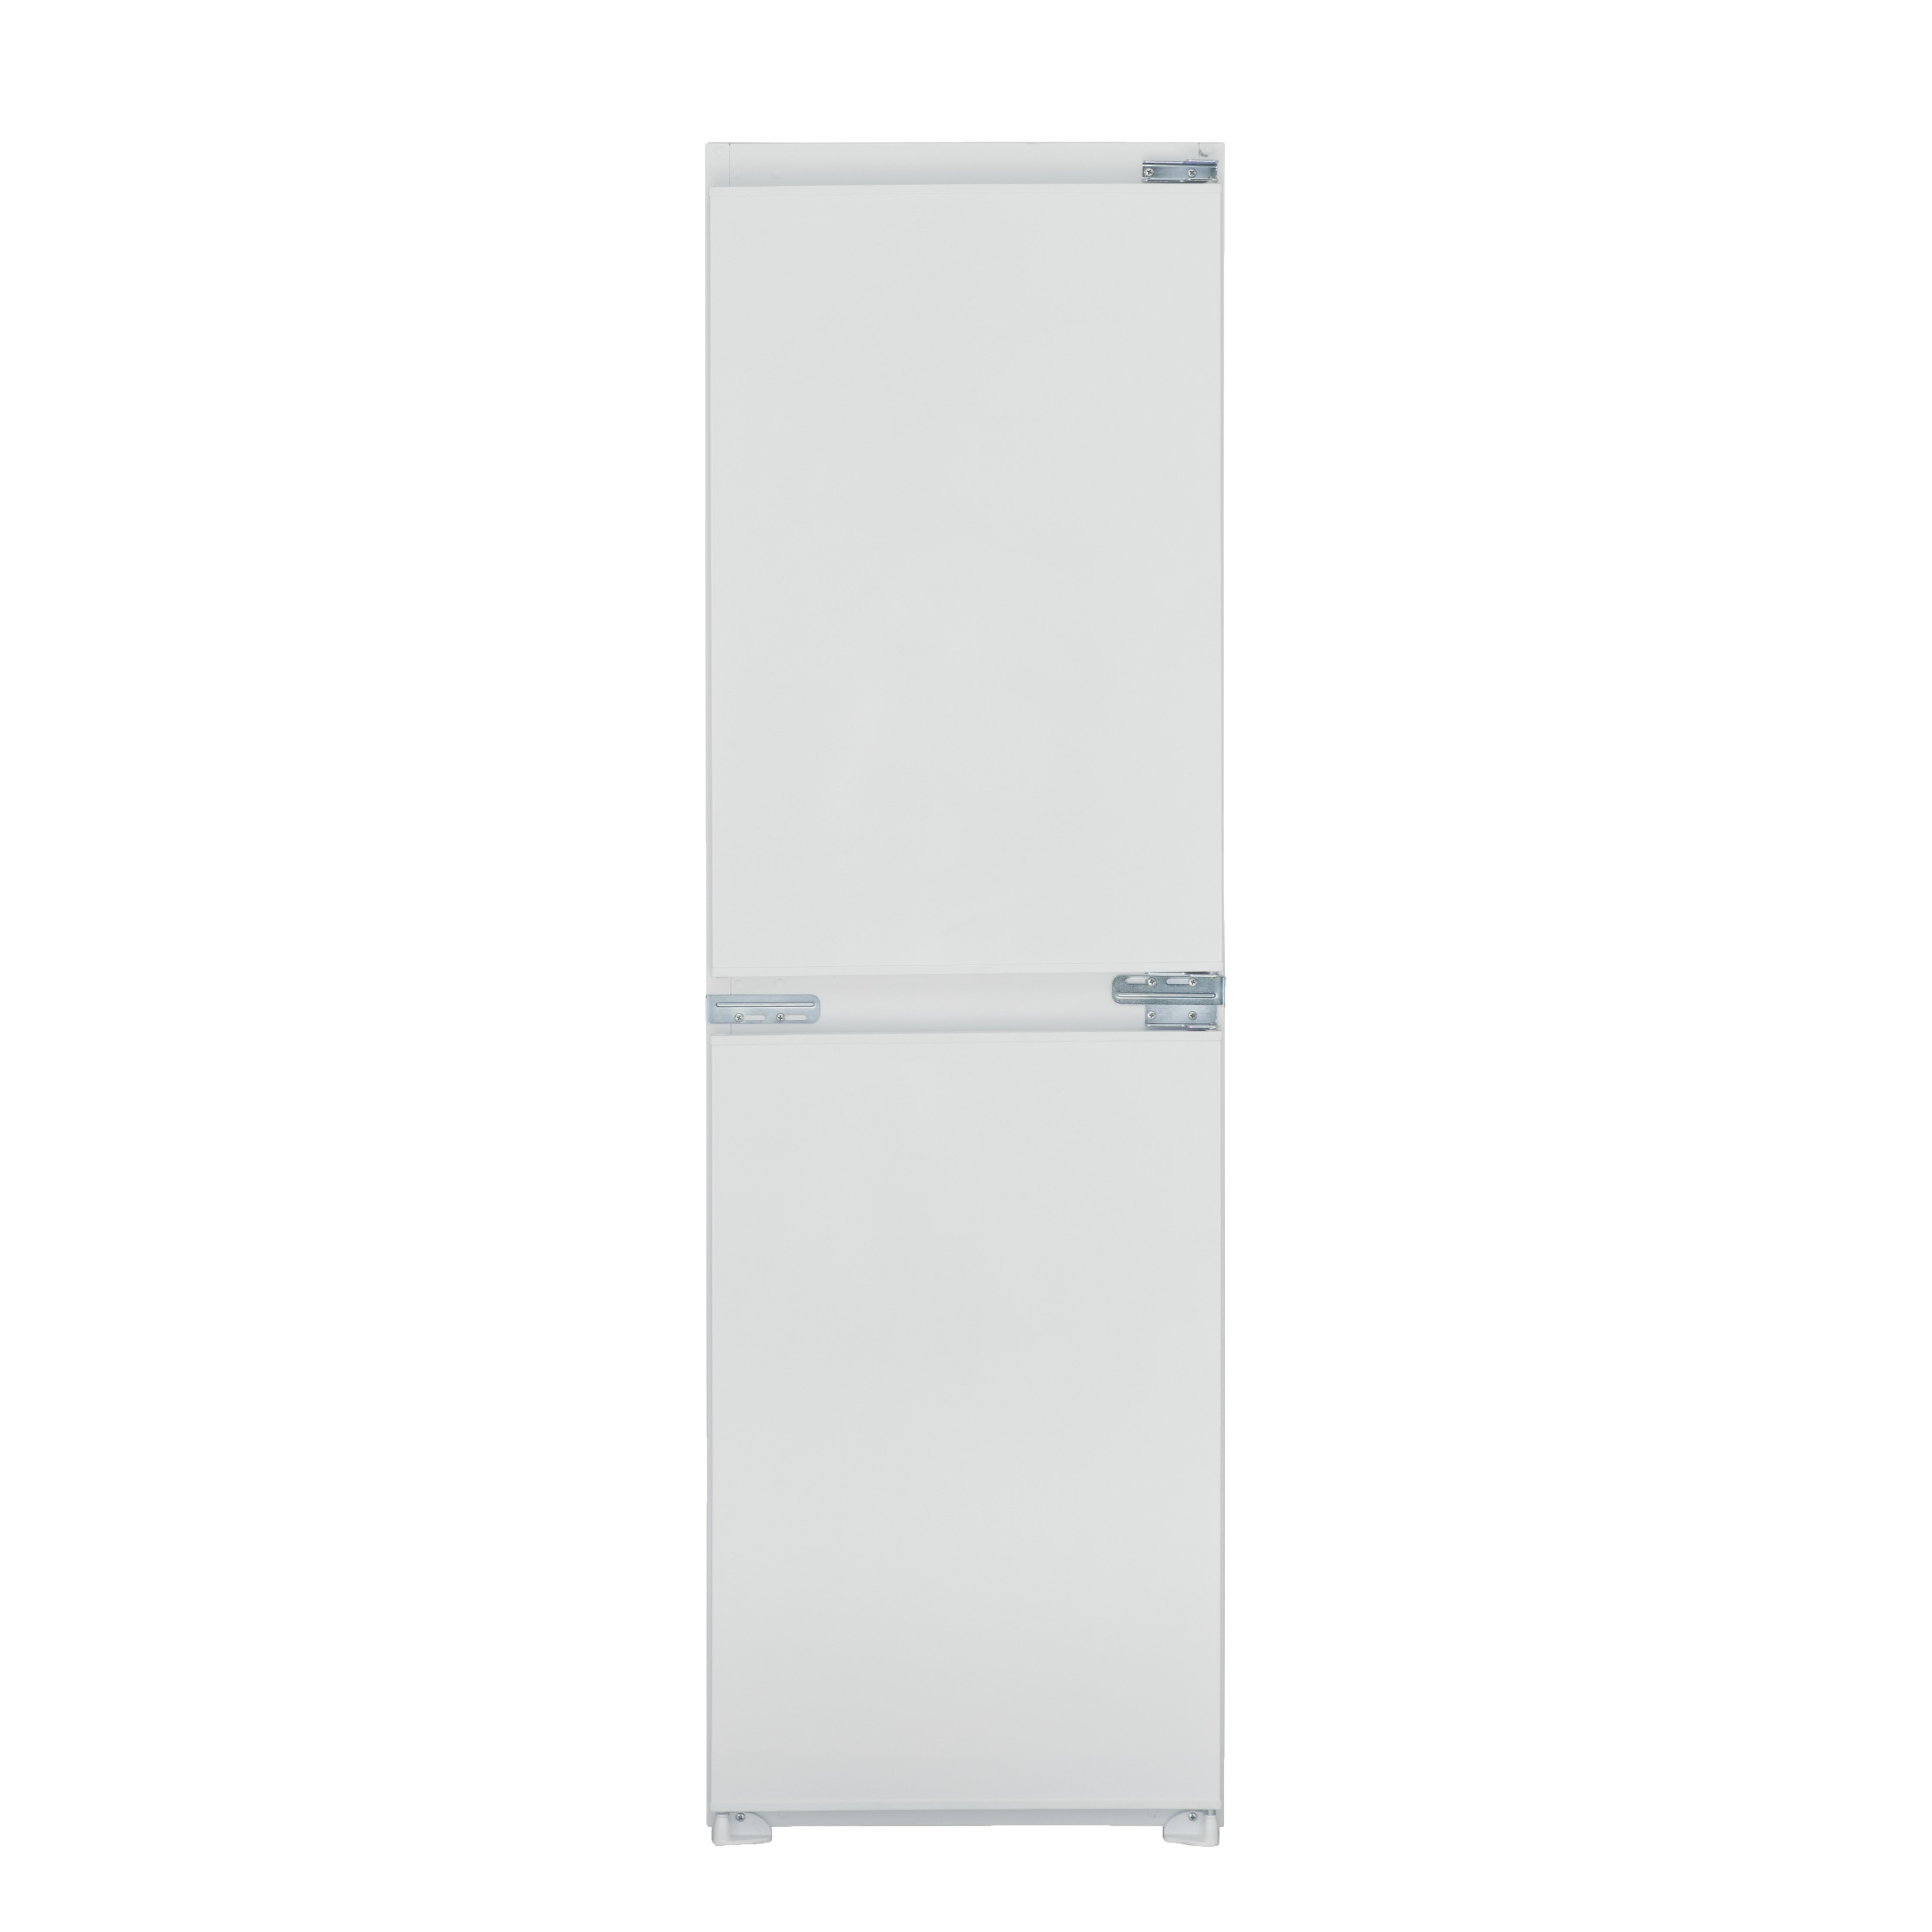 60cm fridge freezer, with 148L fridge & 101L freezer gross capacity. Features a manual thermostat, reversible doors and auto defrost. 